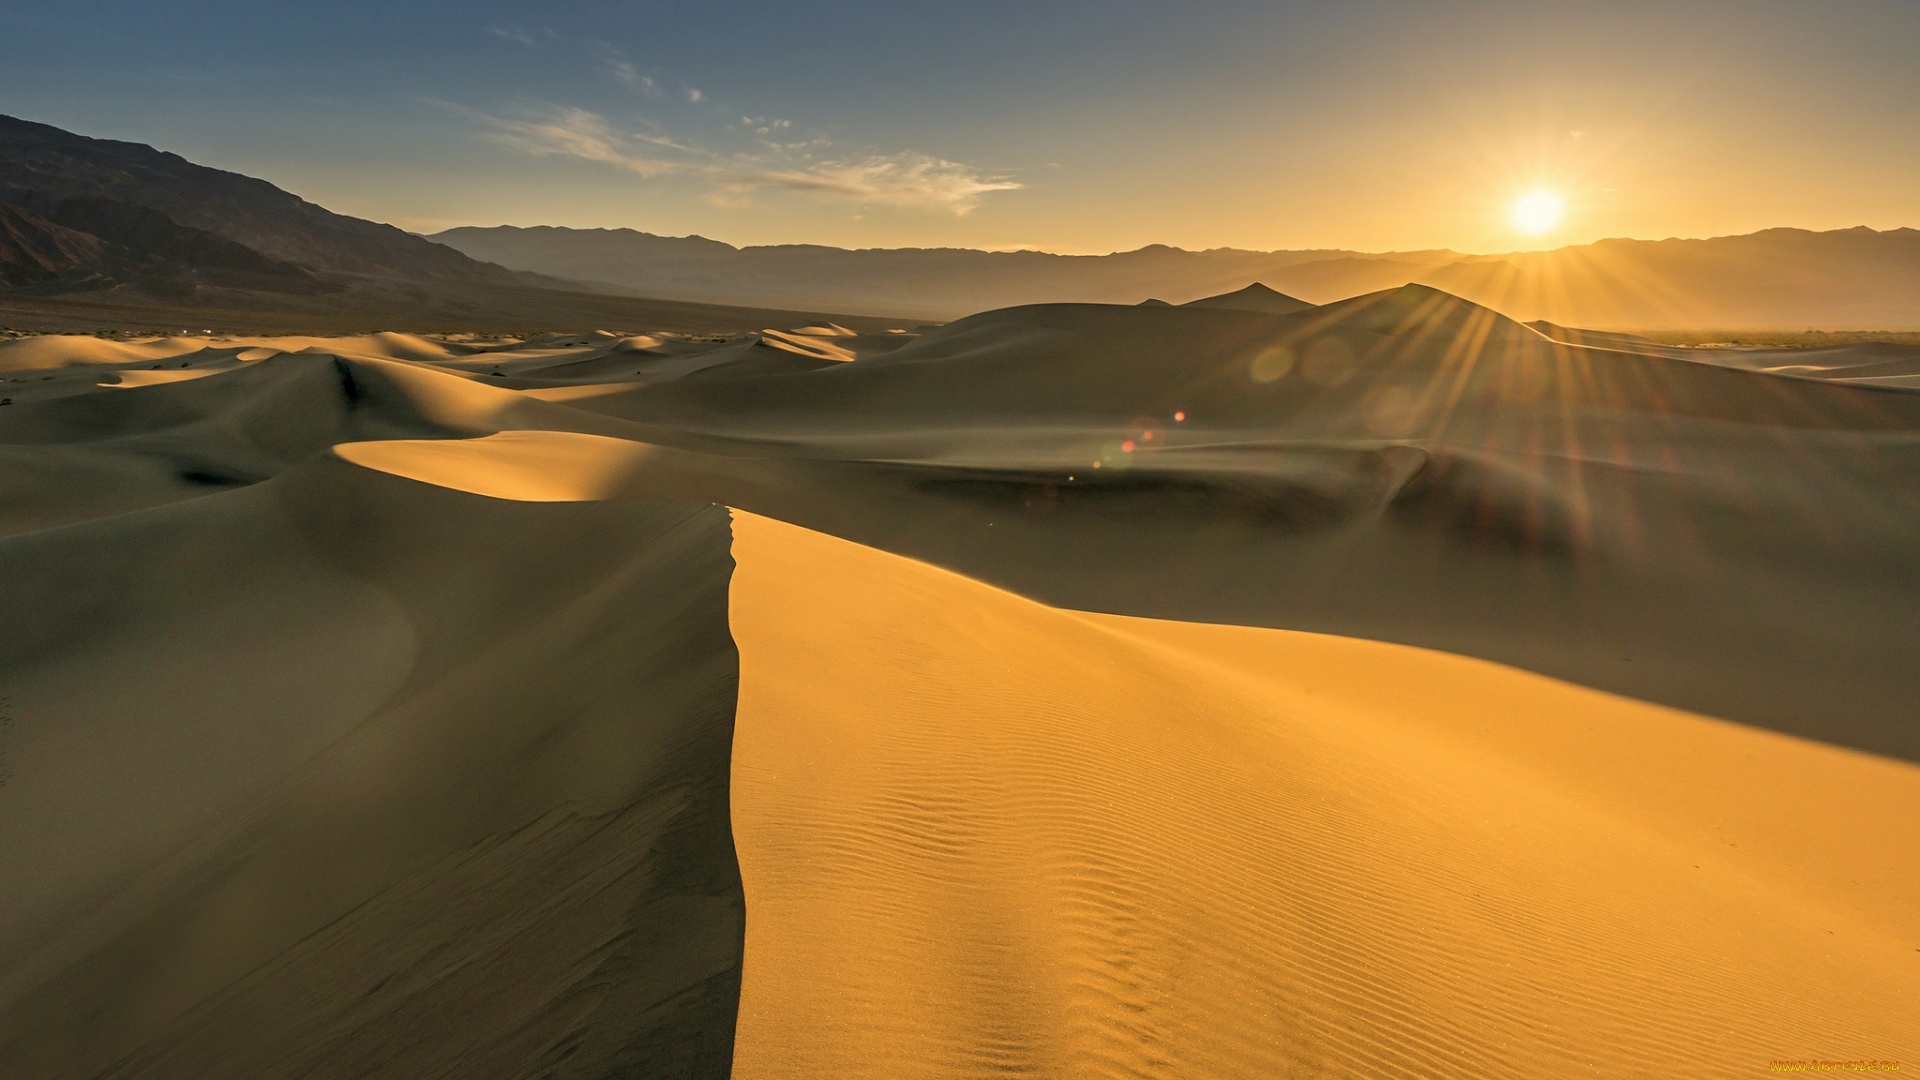 Desert Sun desktop wallpaper free download